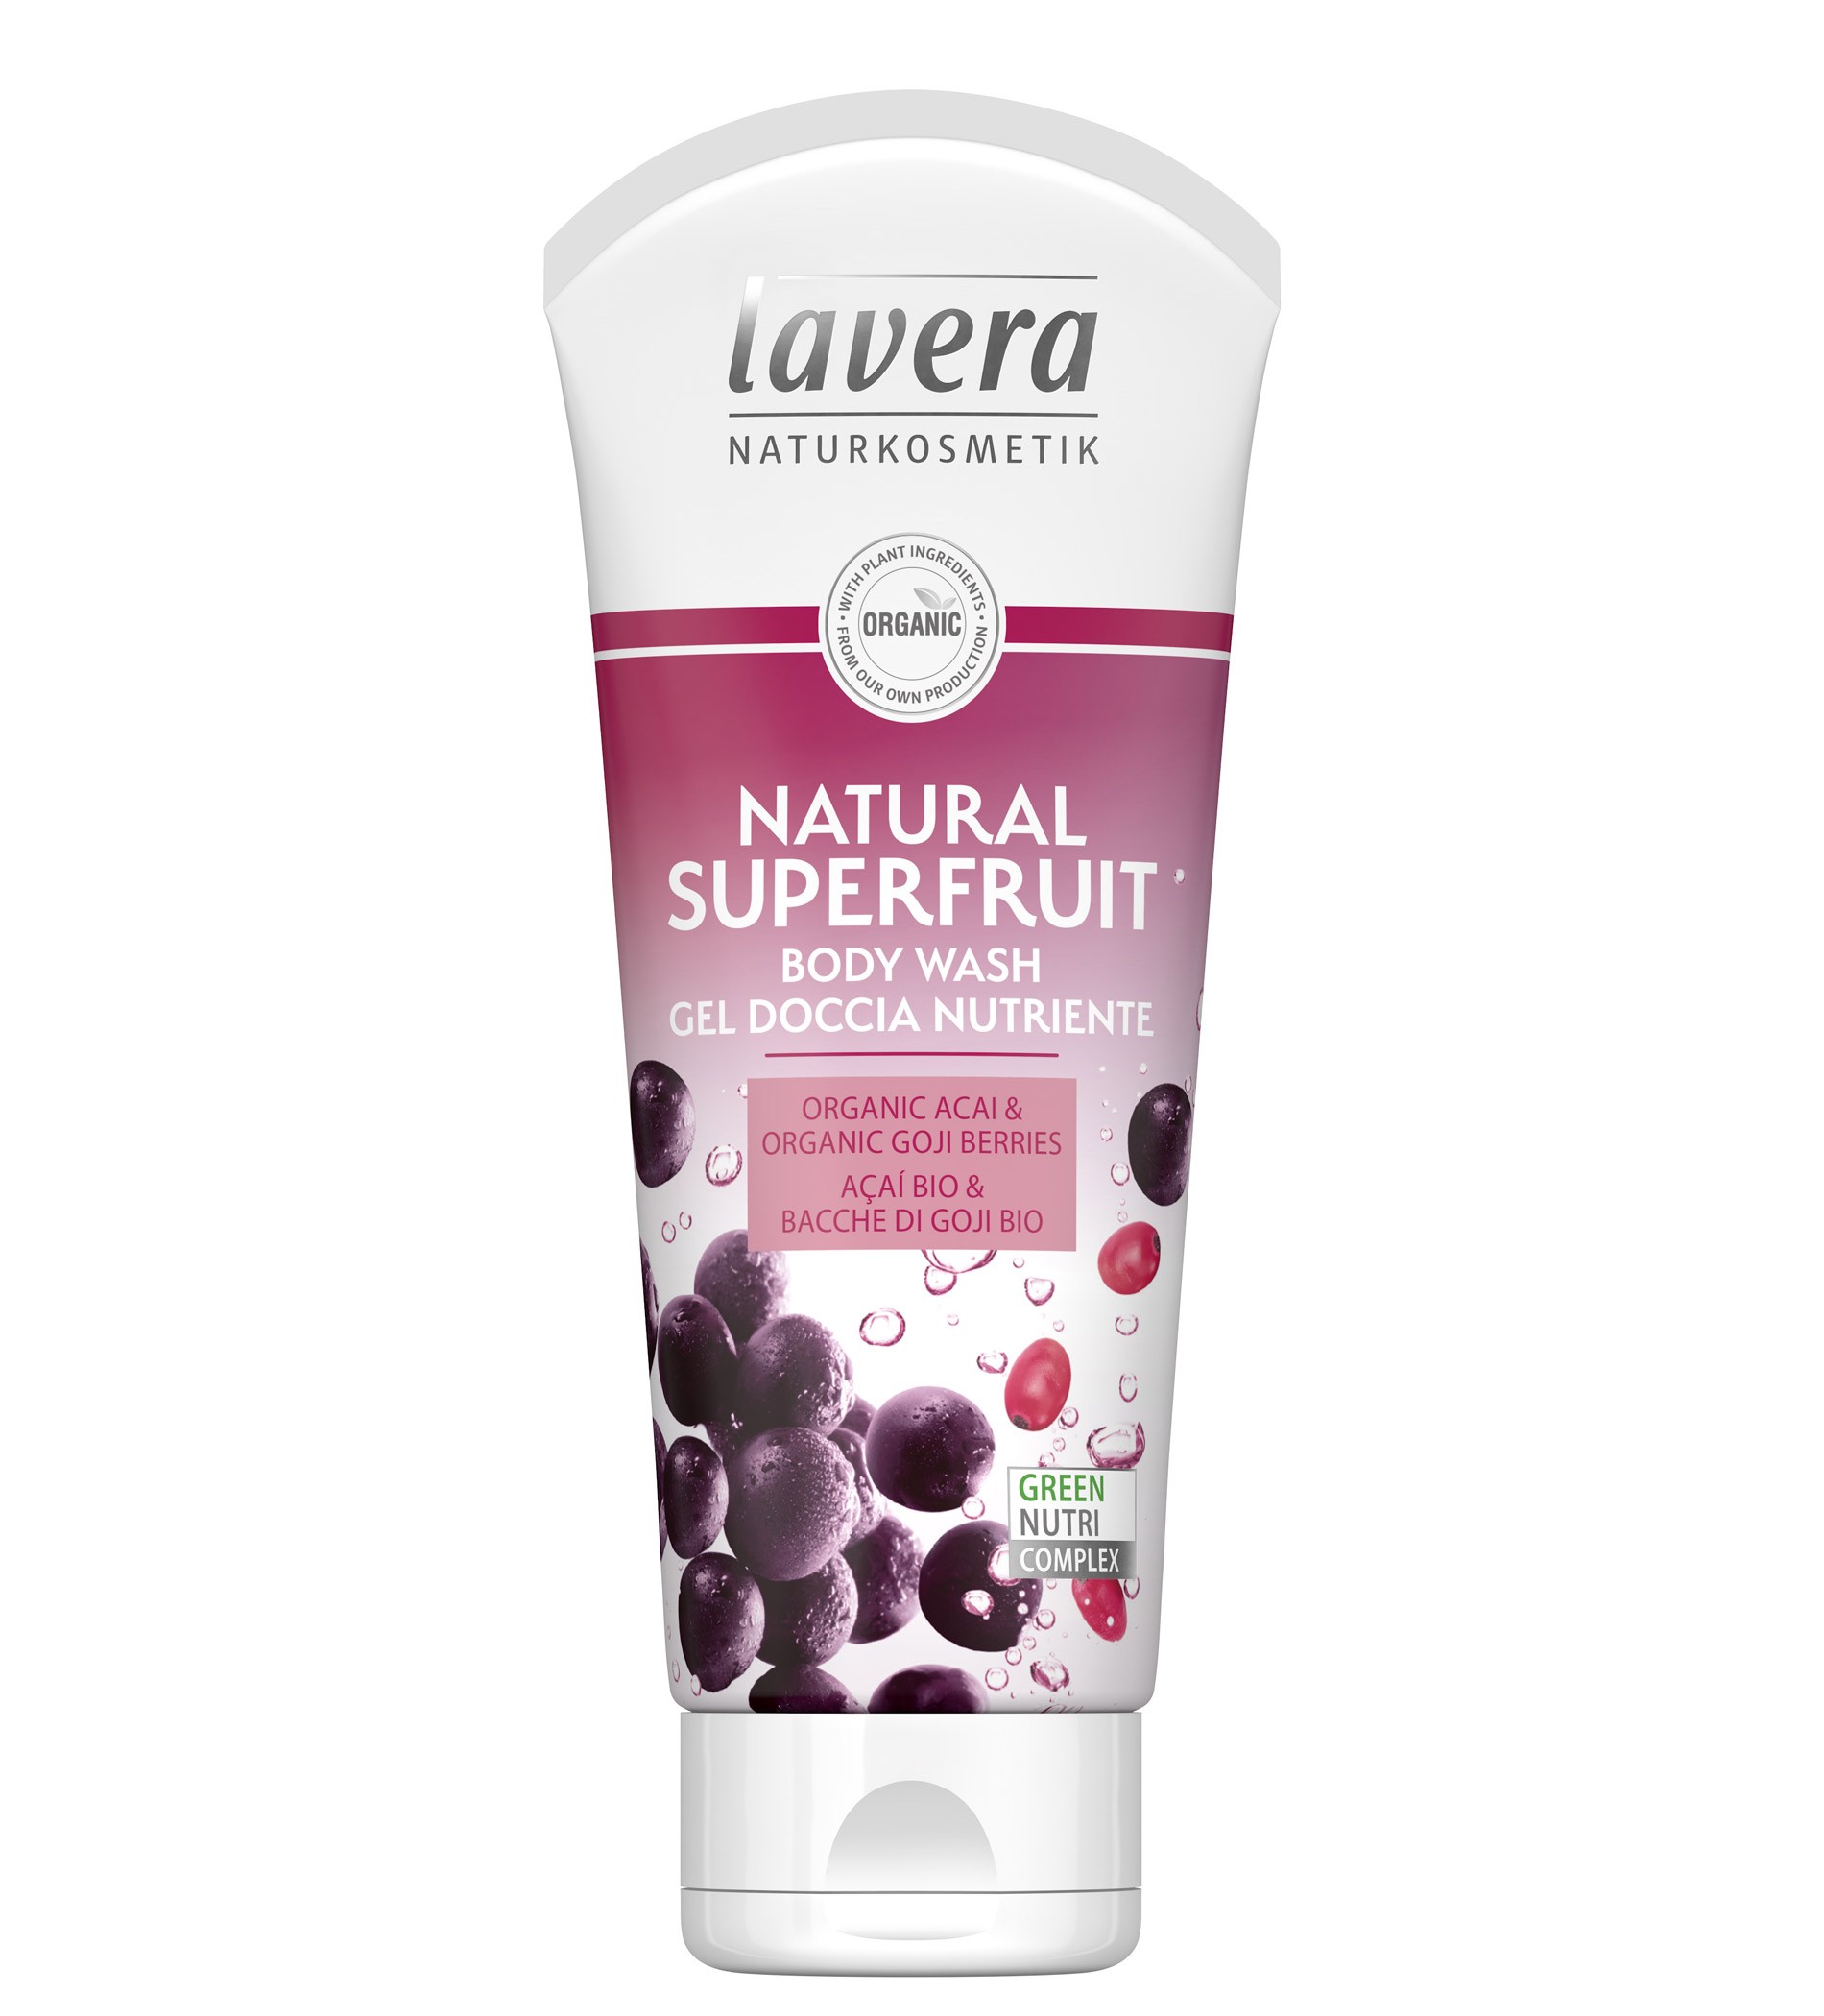 Lavera Body Wash Natural Superfruit Organic Acai & Goji Berries